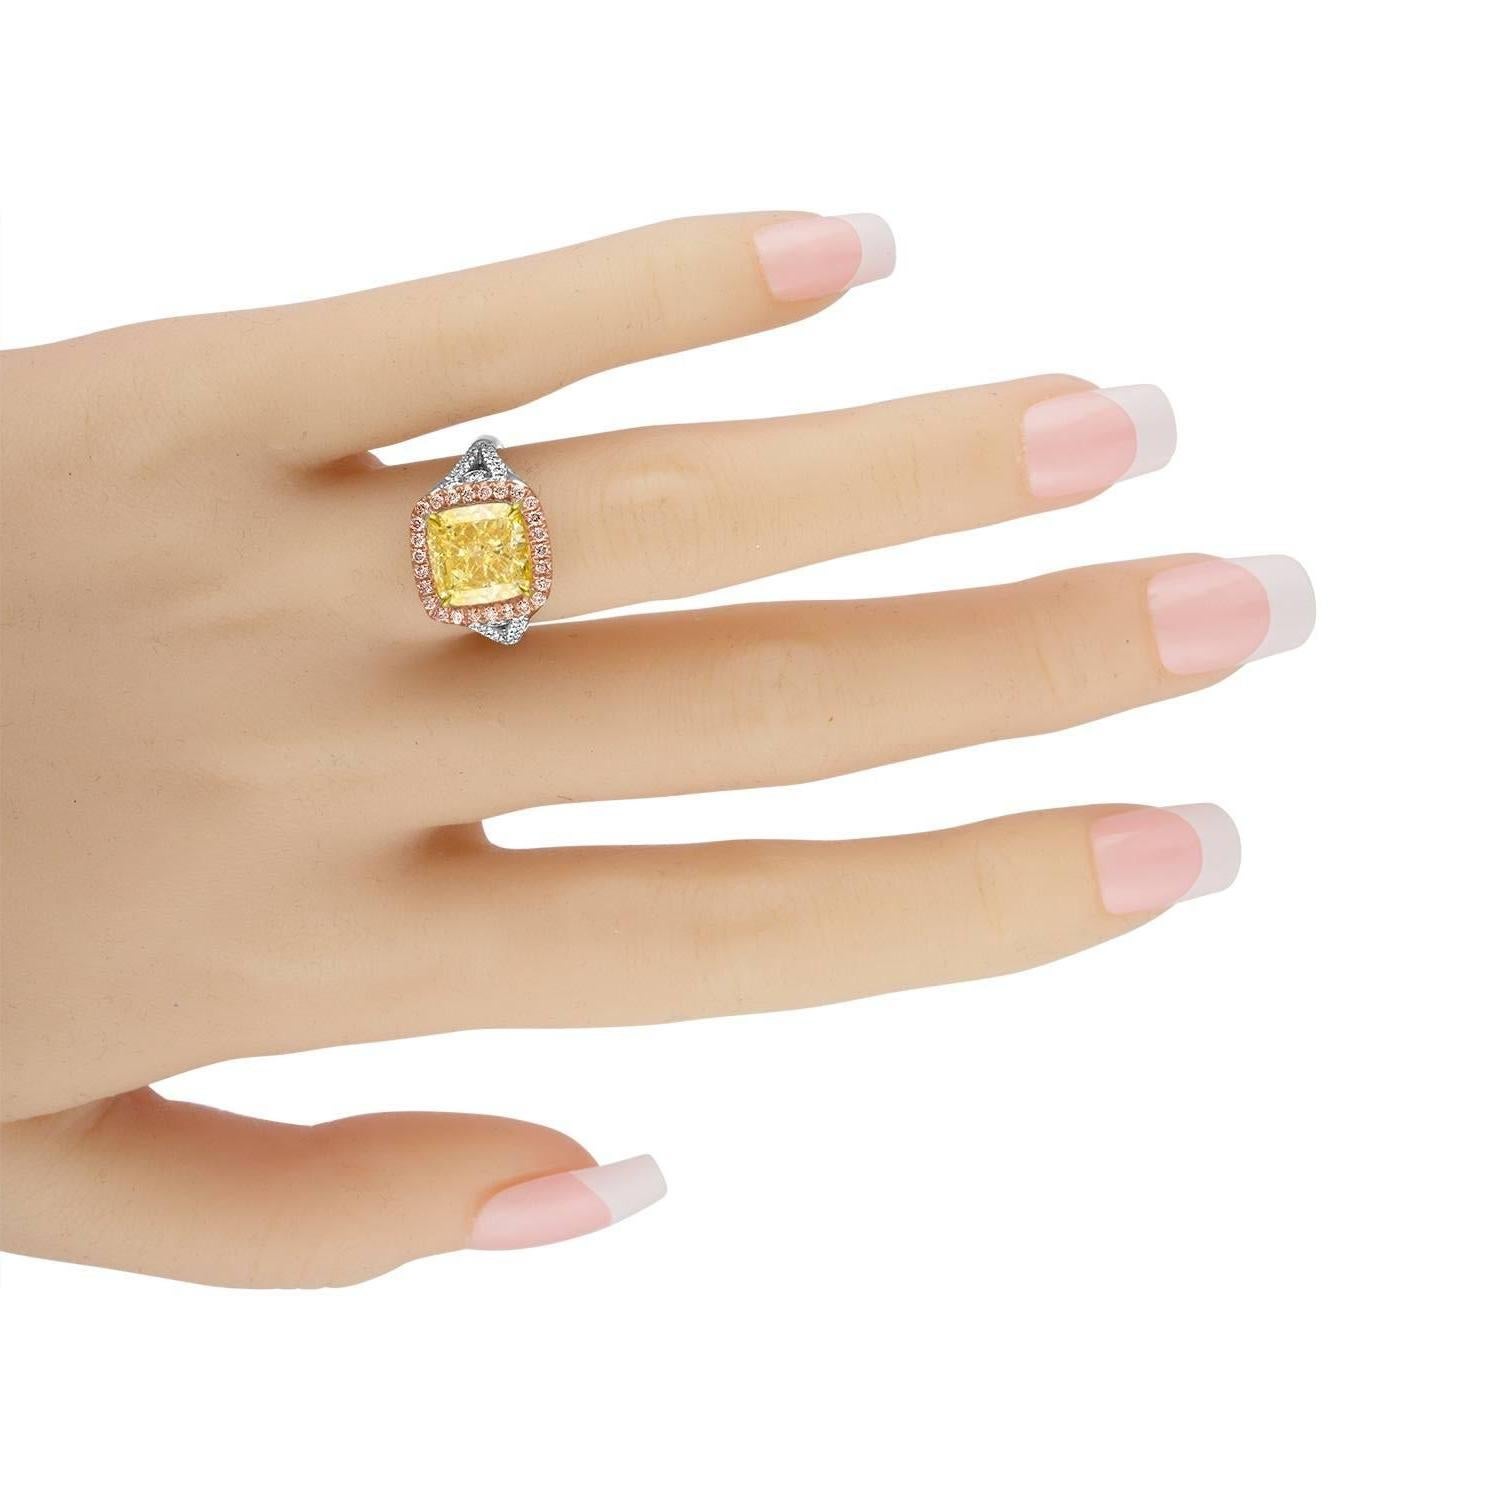 5.03 GIA Fancy Yellow Cushion Cut Diamond in Tri-Color Ring 2